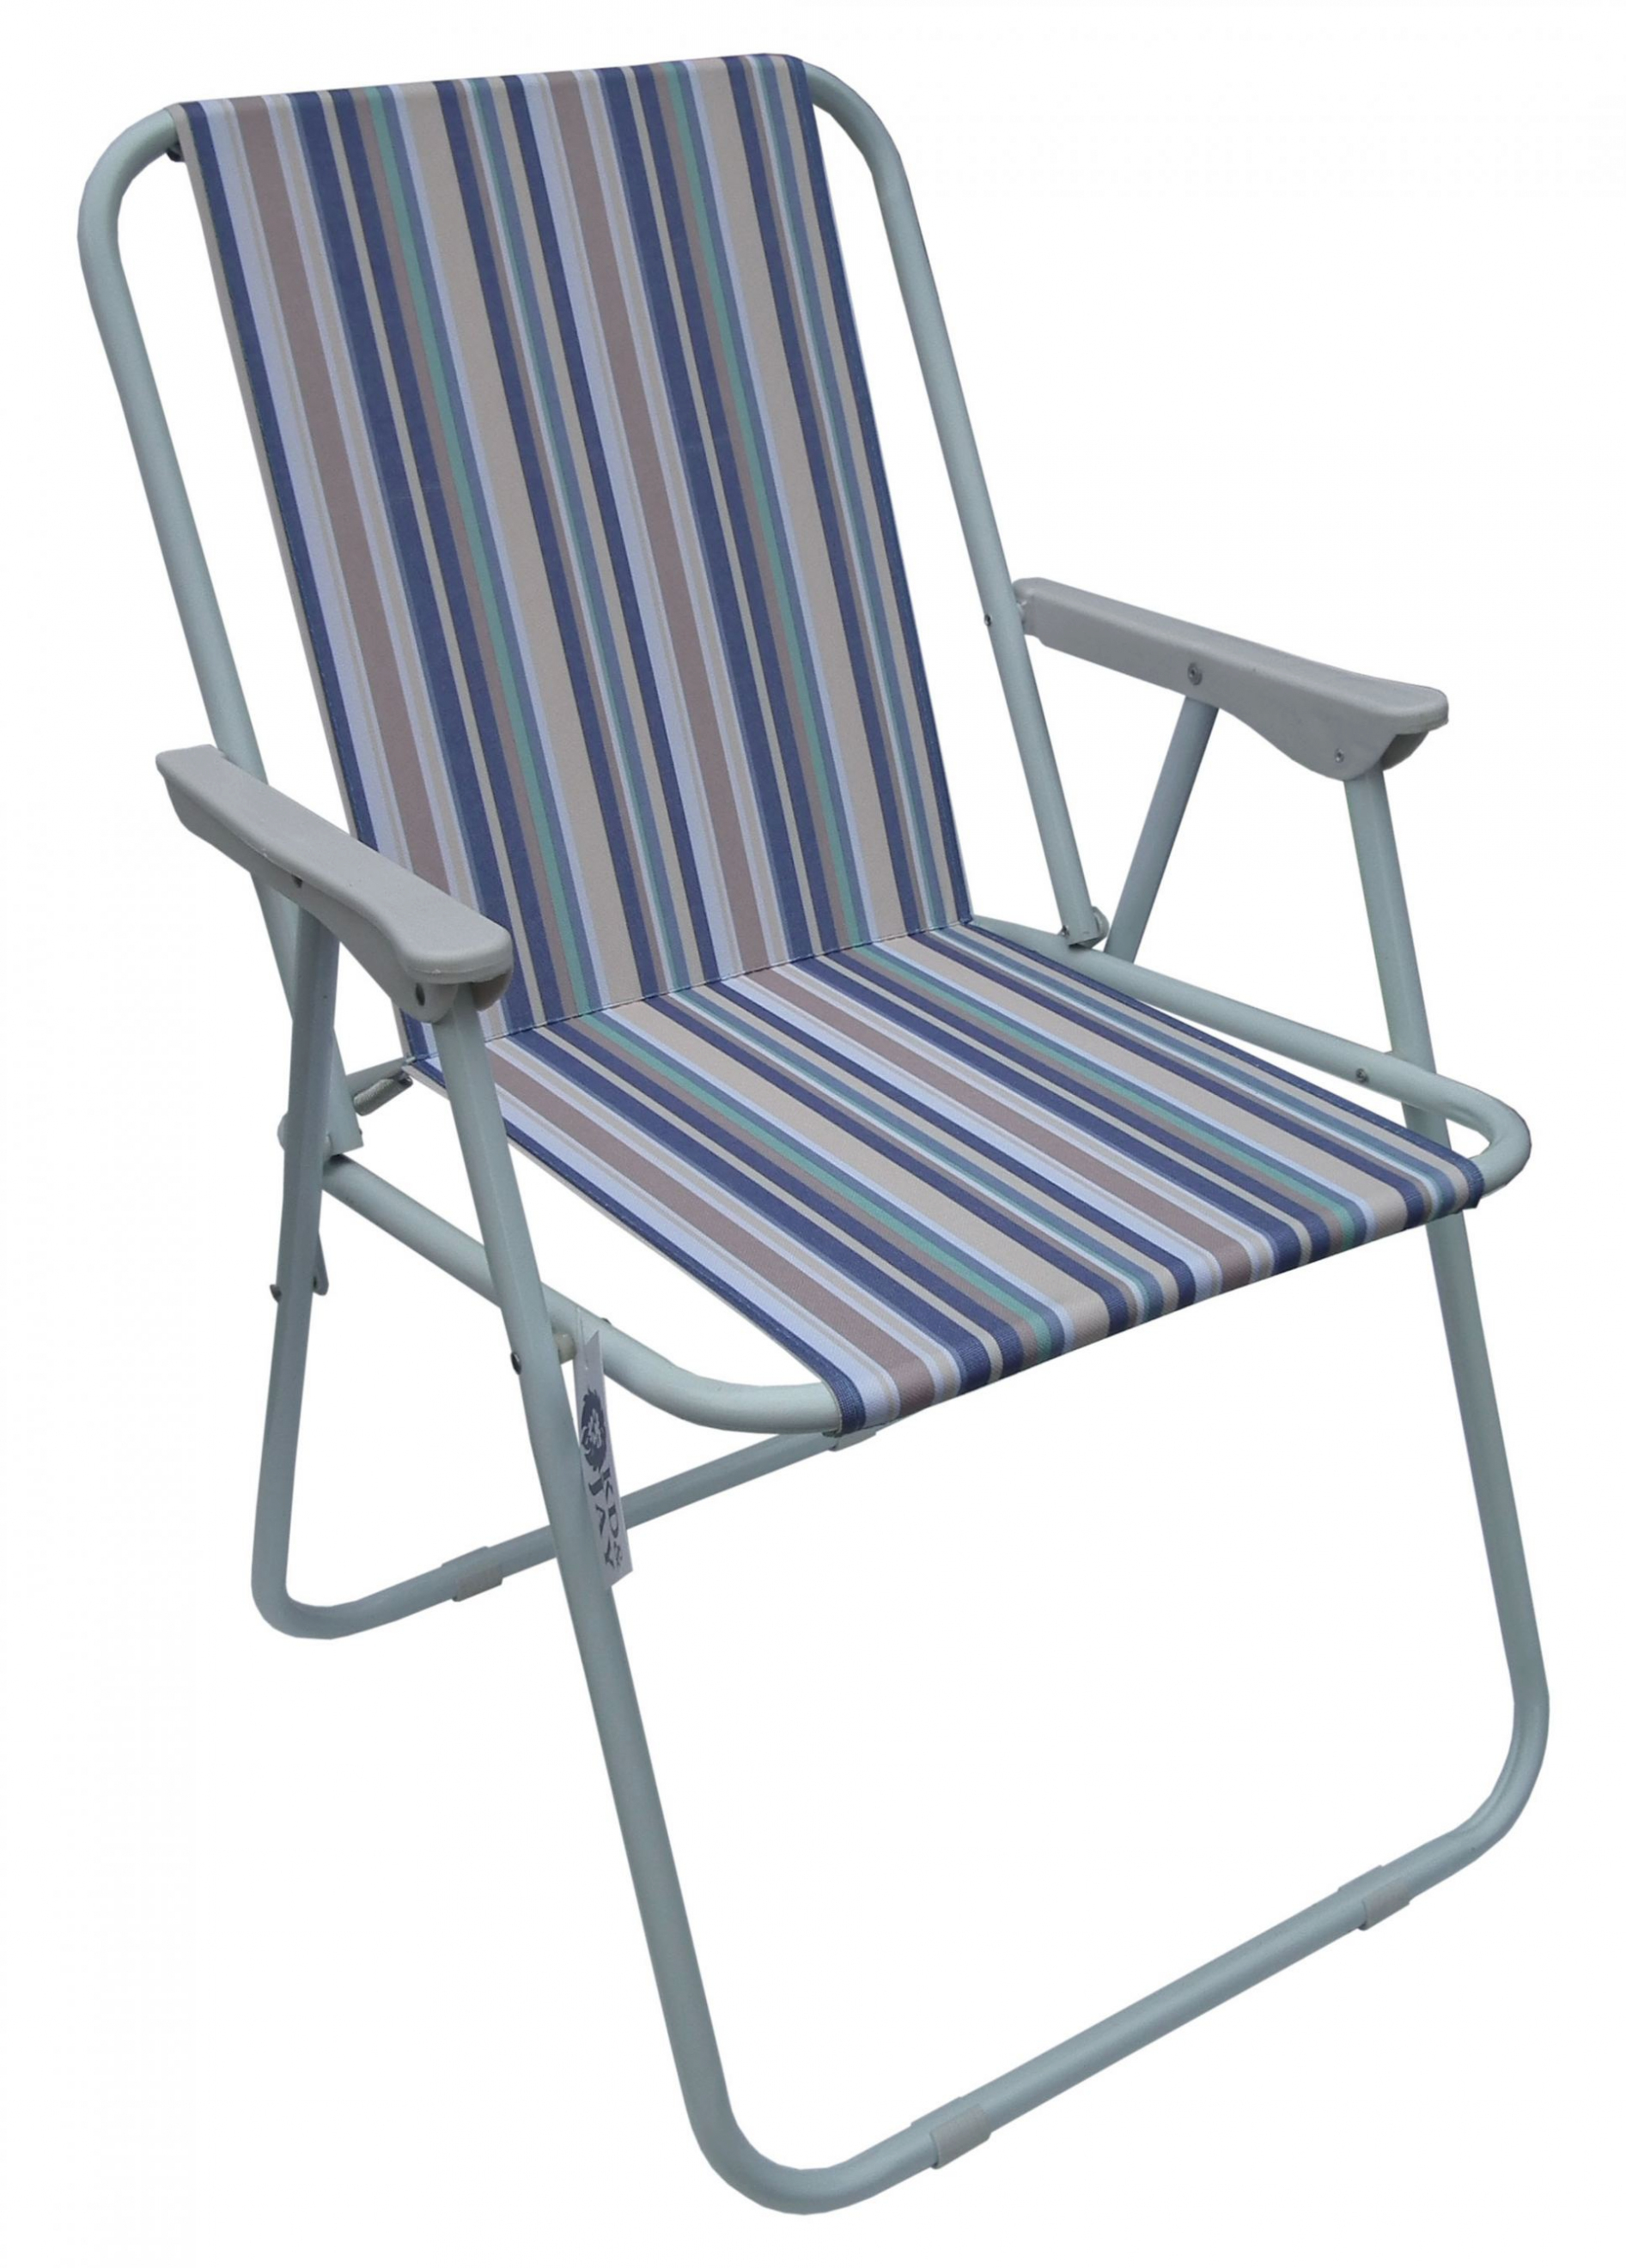 Free Photo Old Beach Chair Alone Beach Chair Free Download